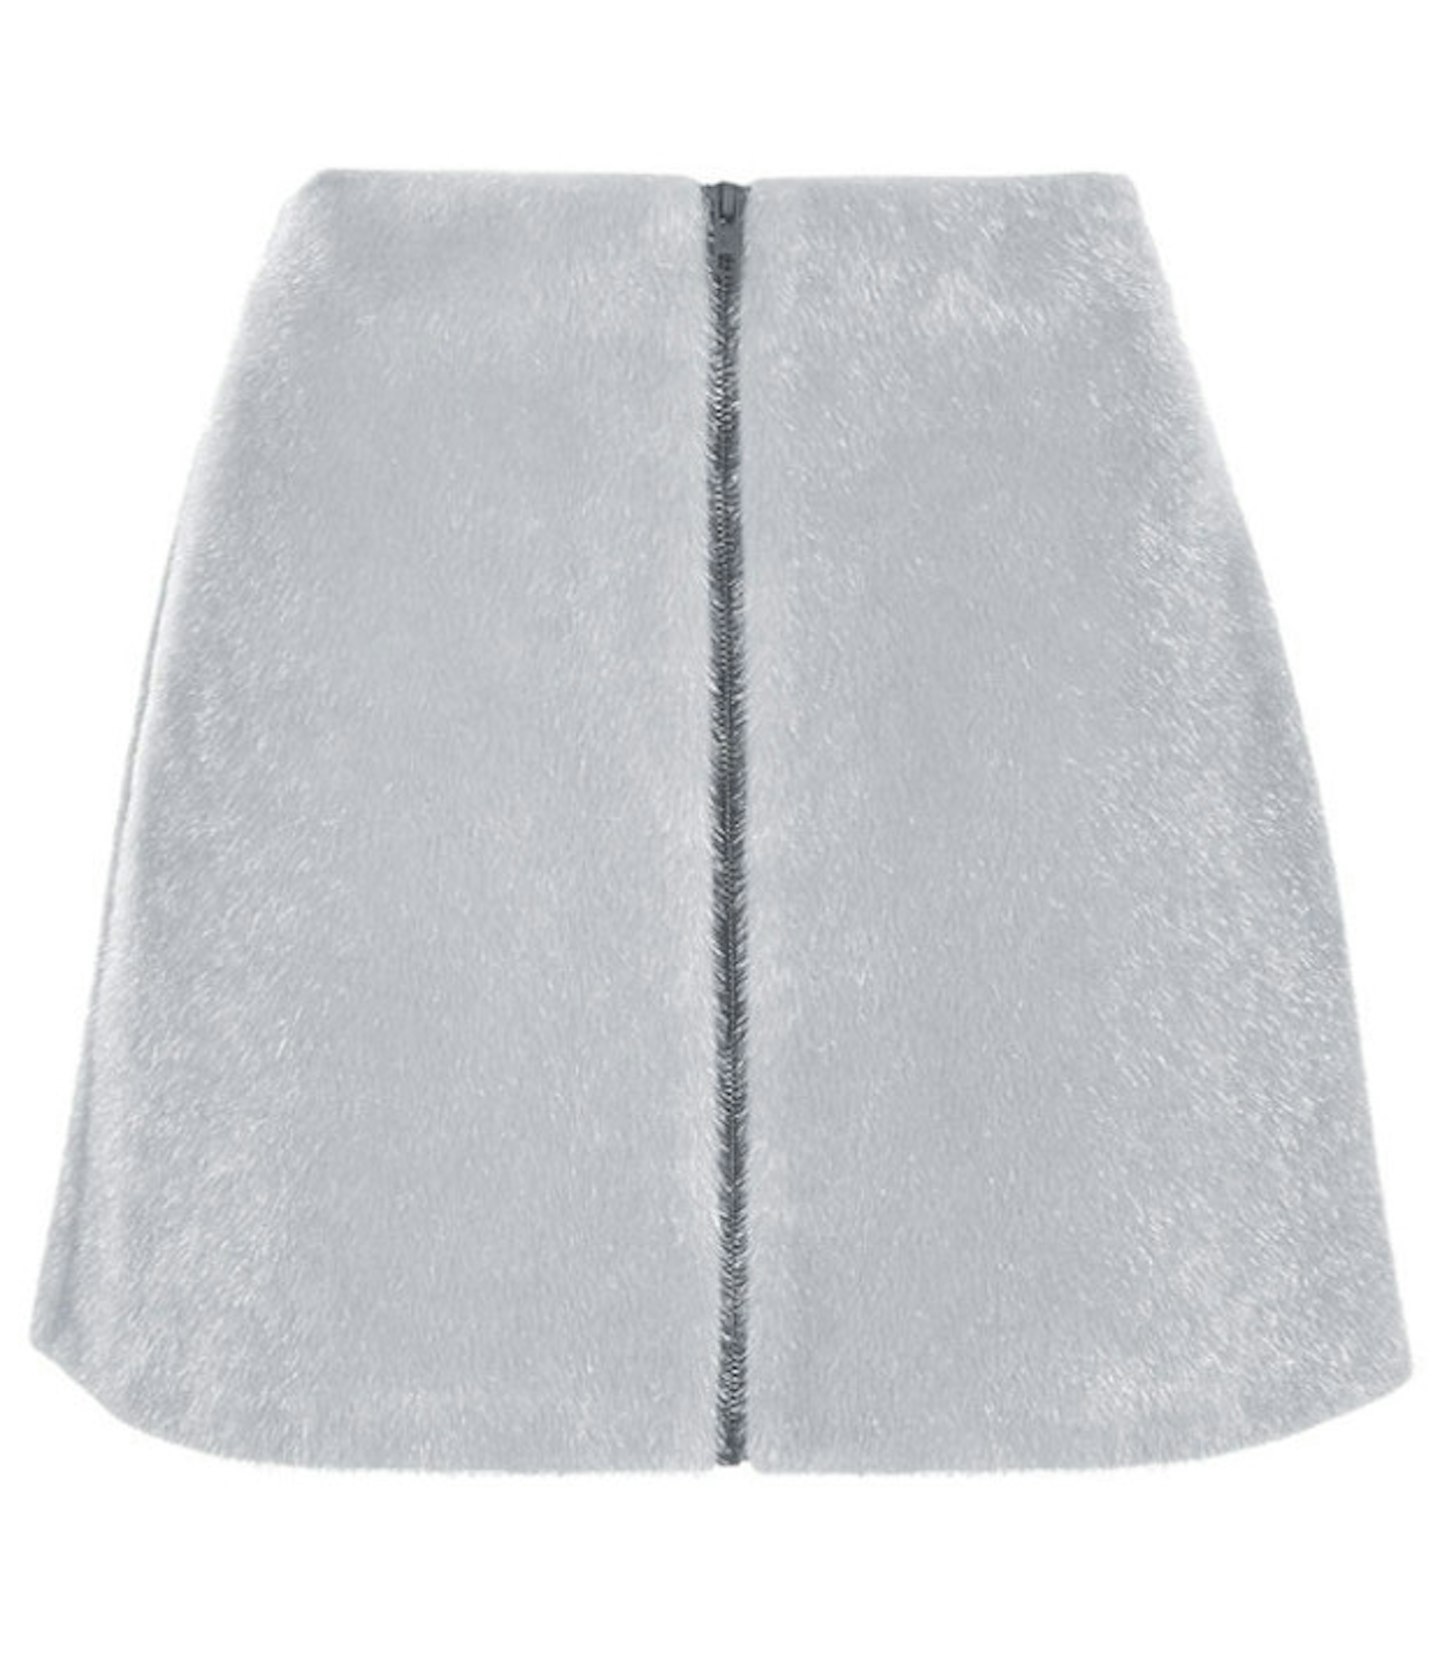 Furry skirt